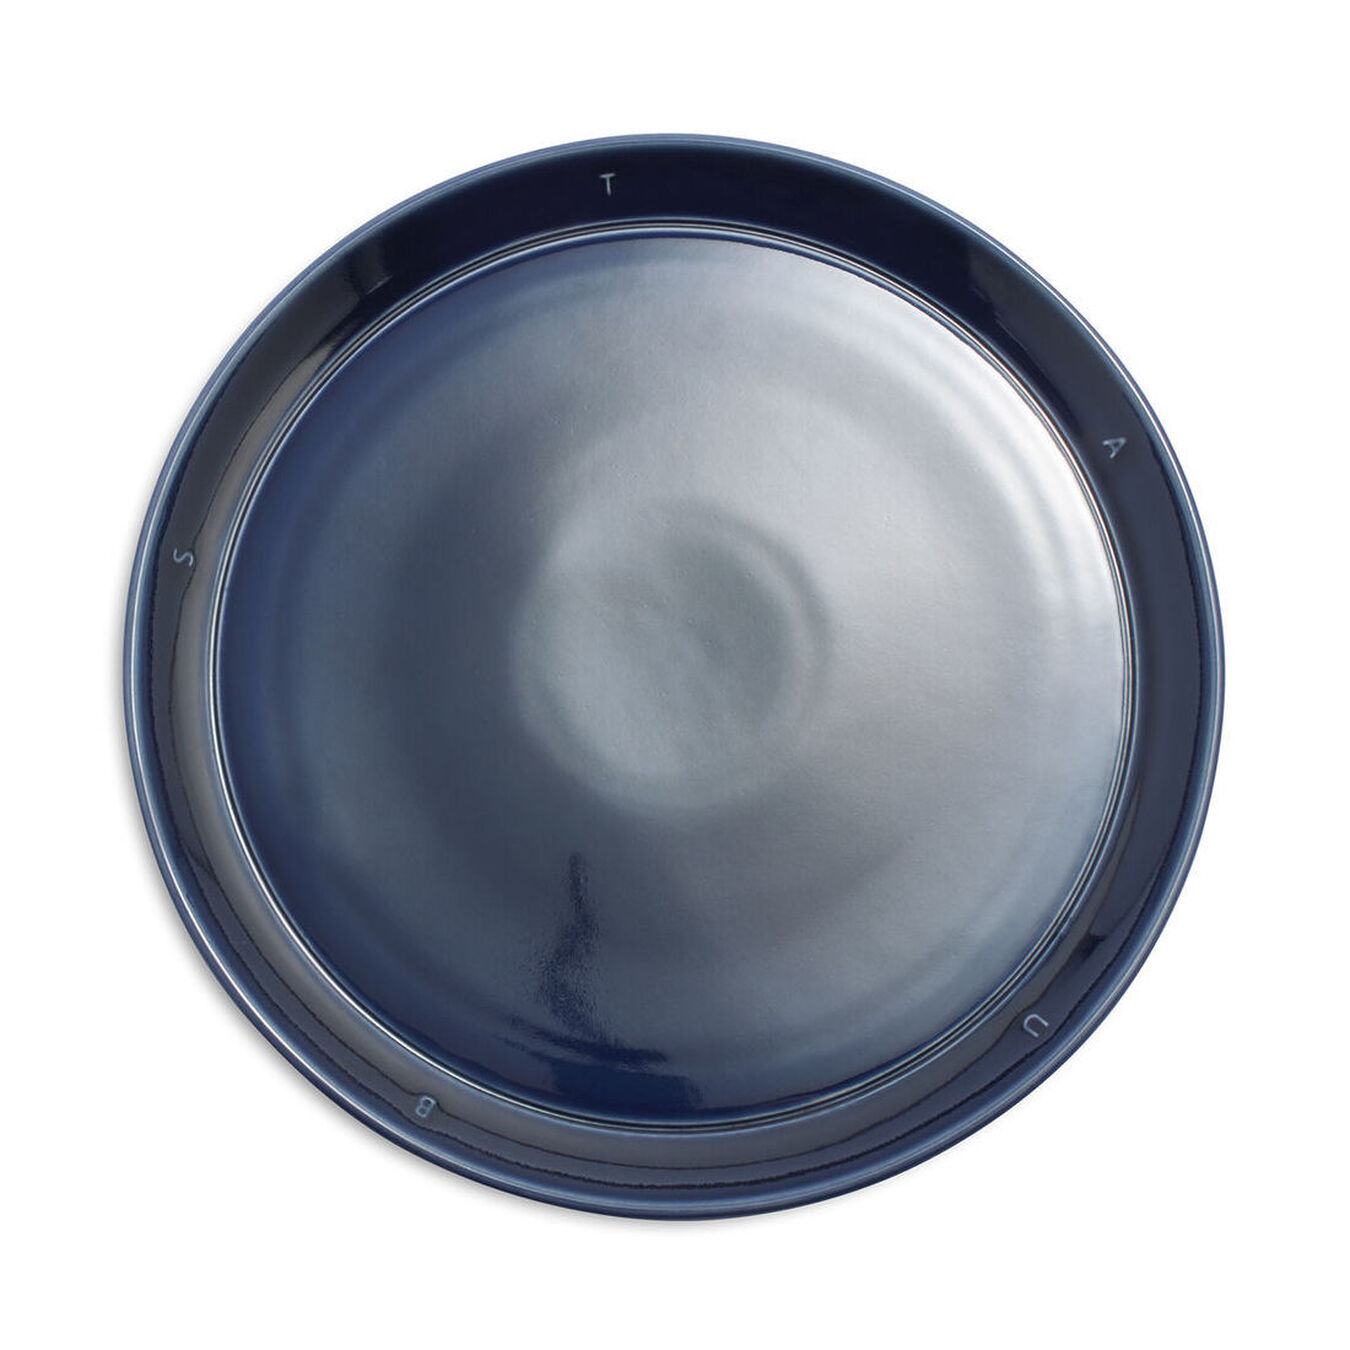 Serving set, 12 Piece | dark-blue | ceramic,,large 4